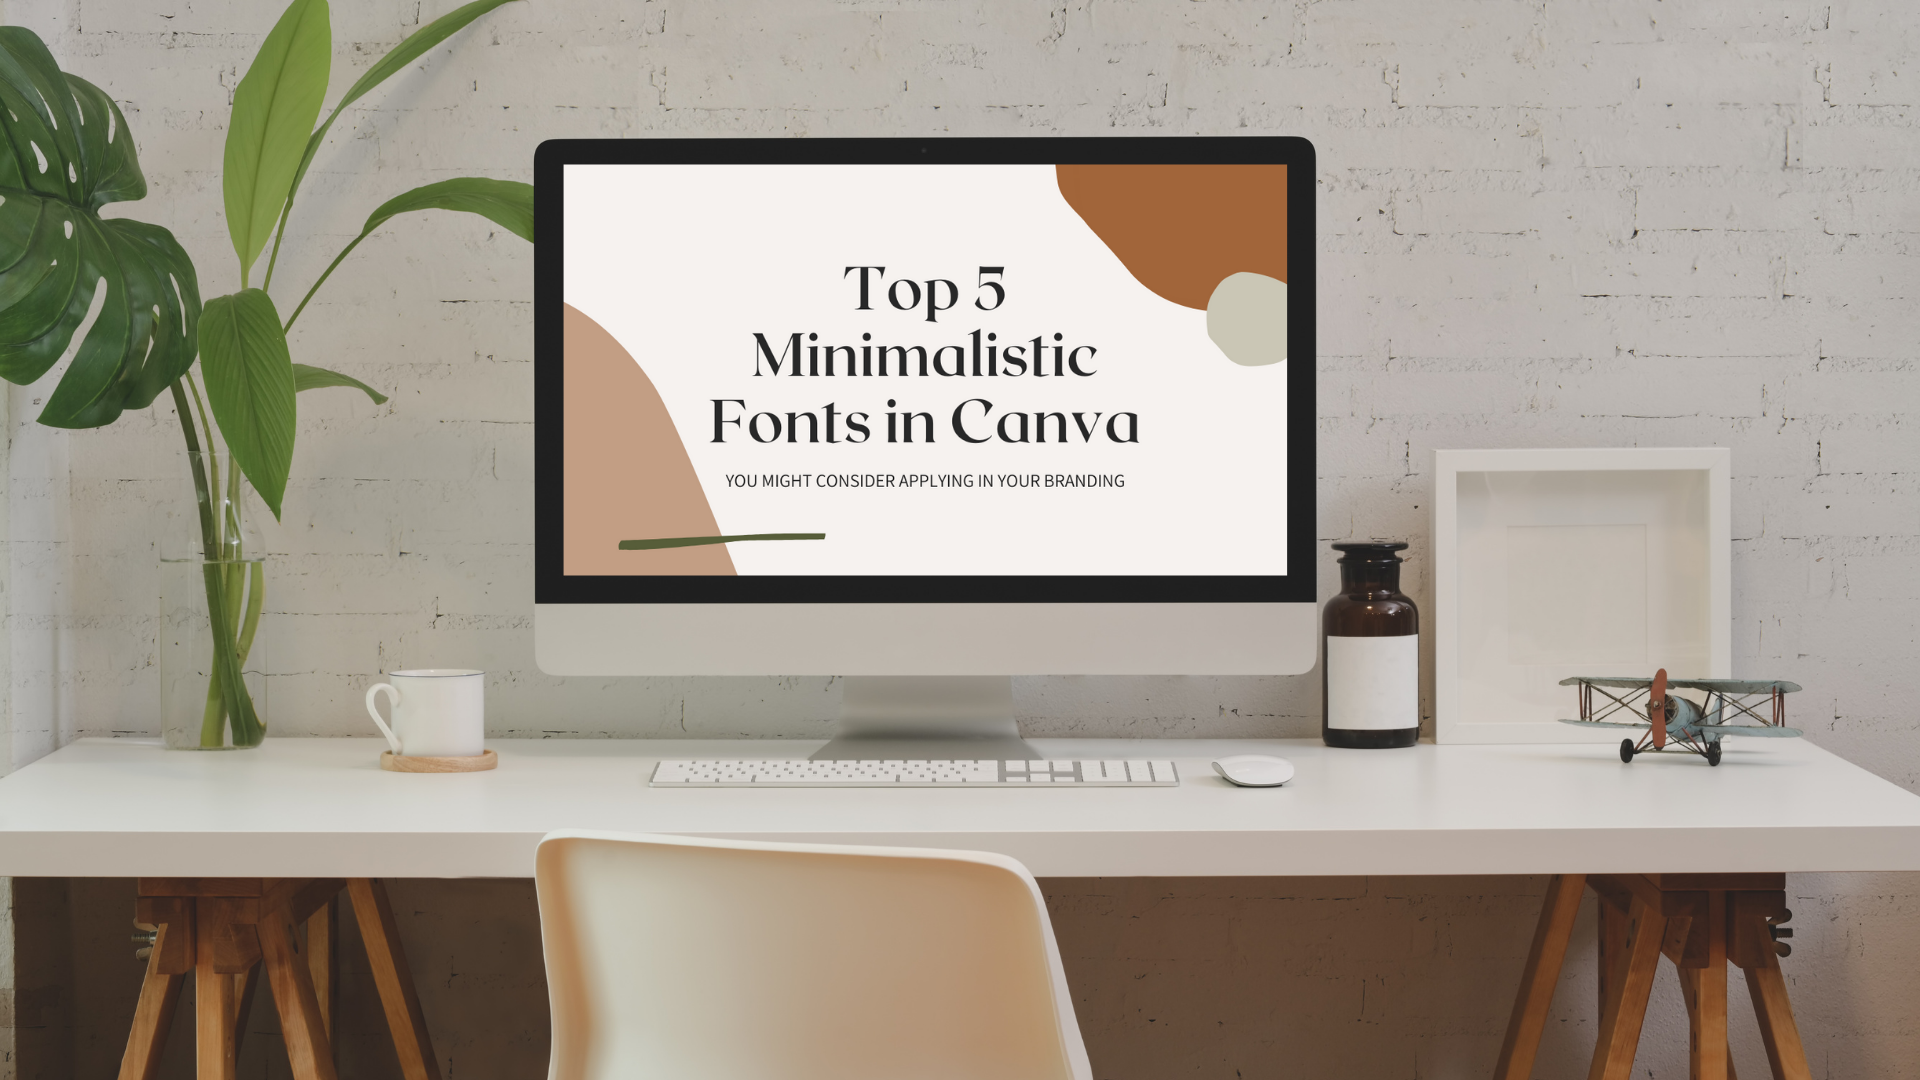 Top 5 Minimalistic Fonts in Canva